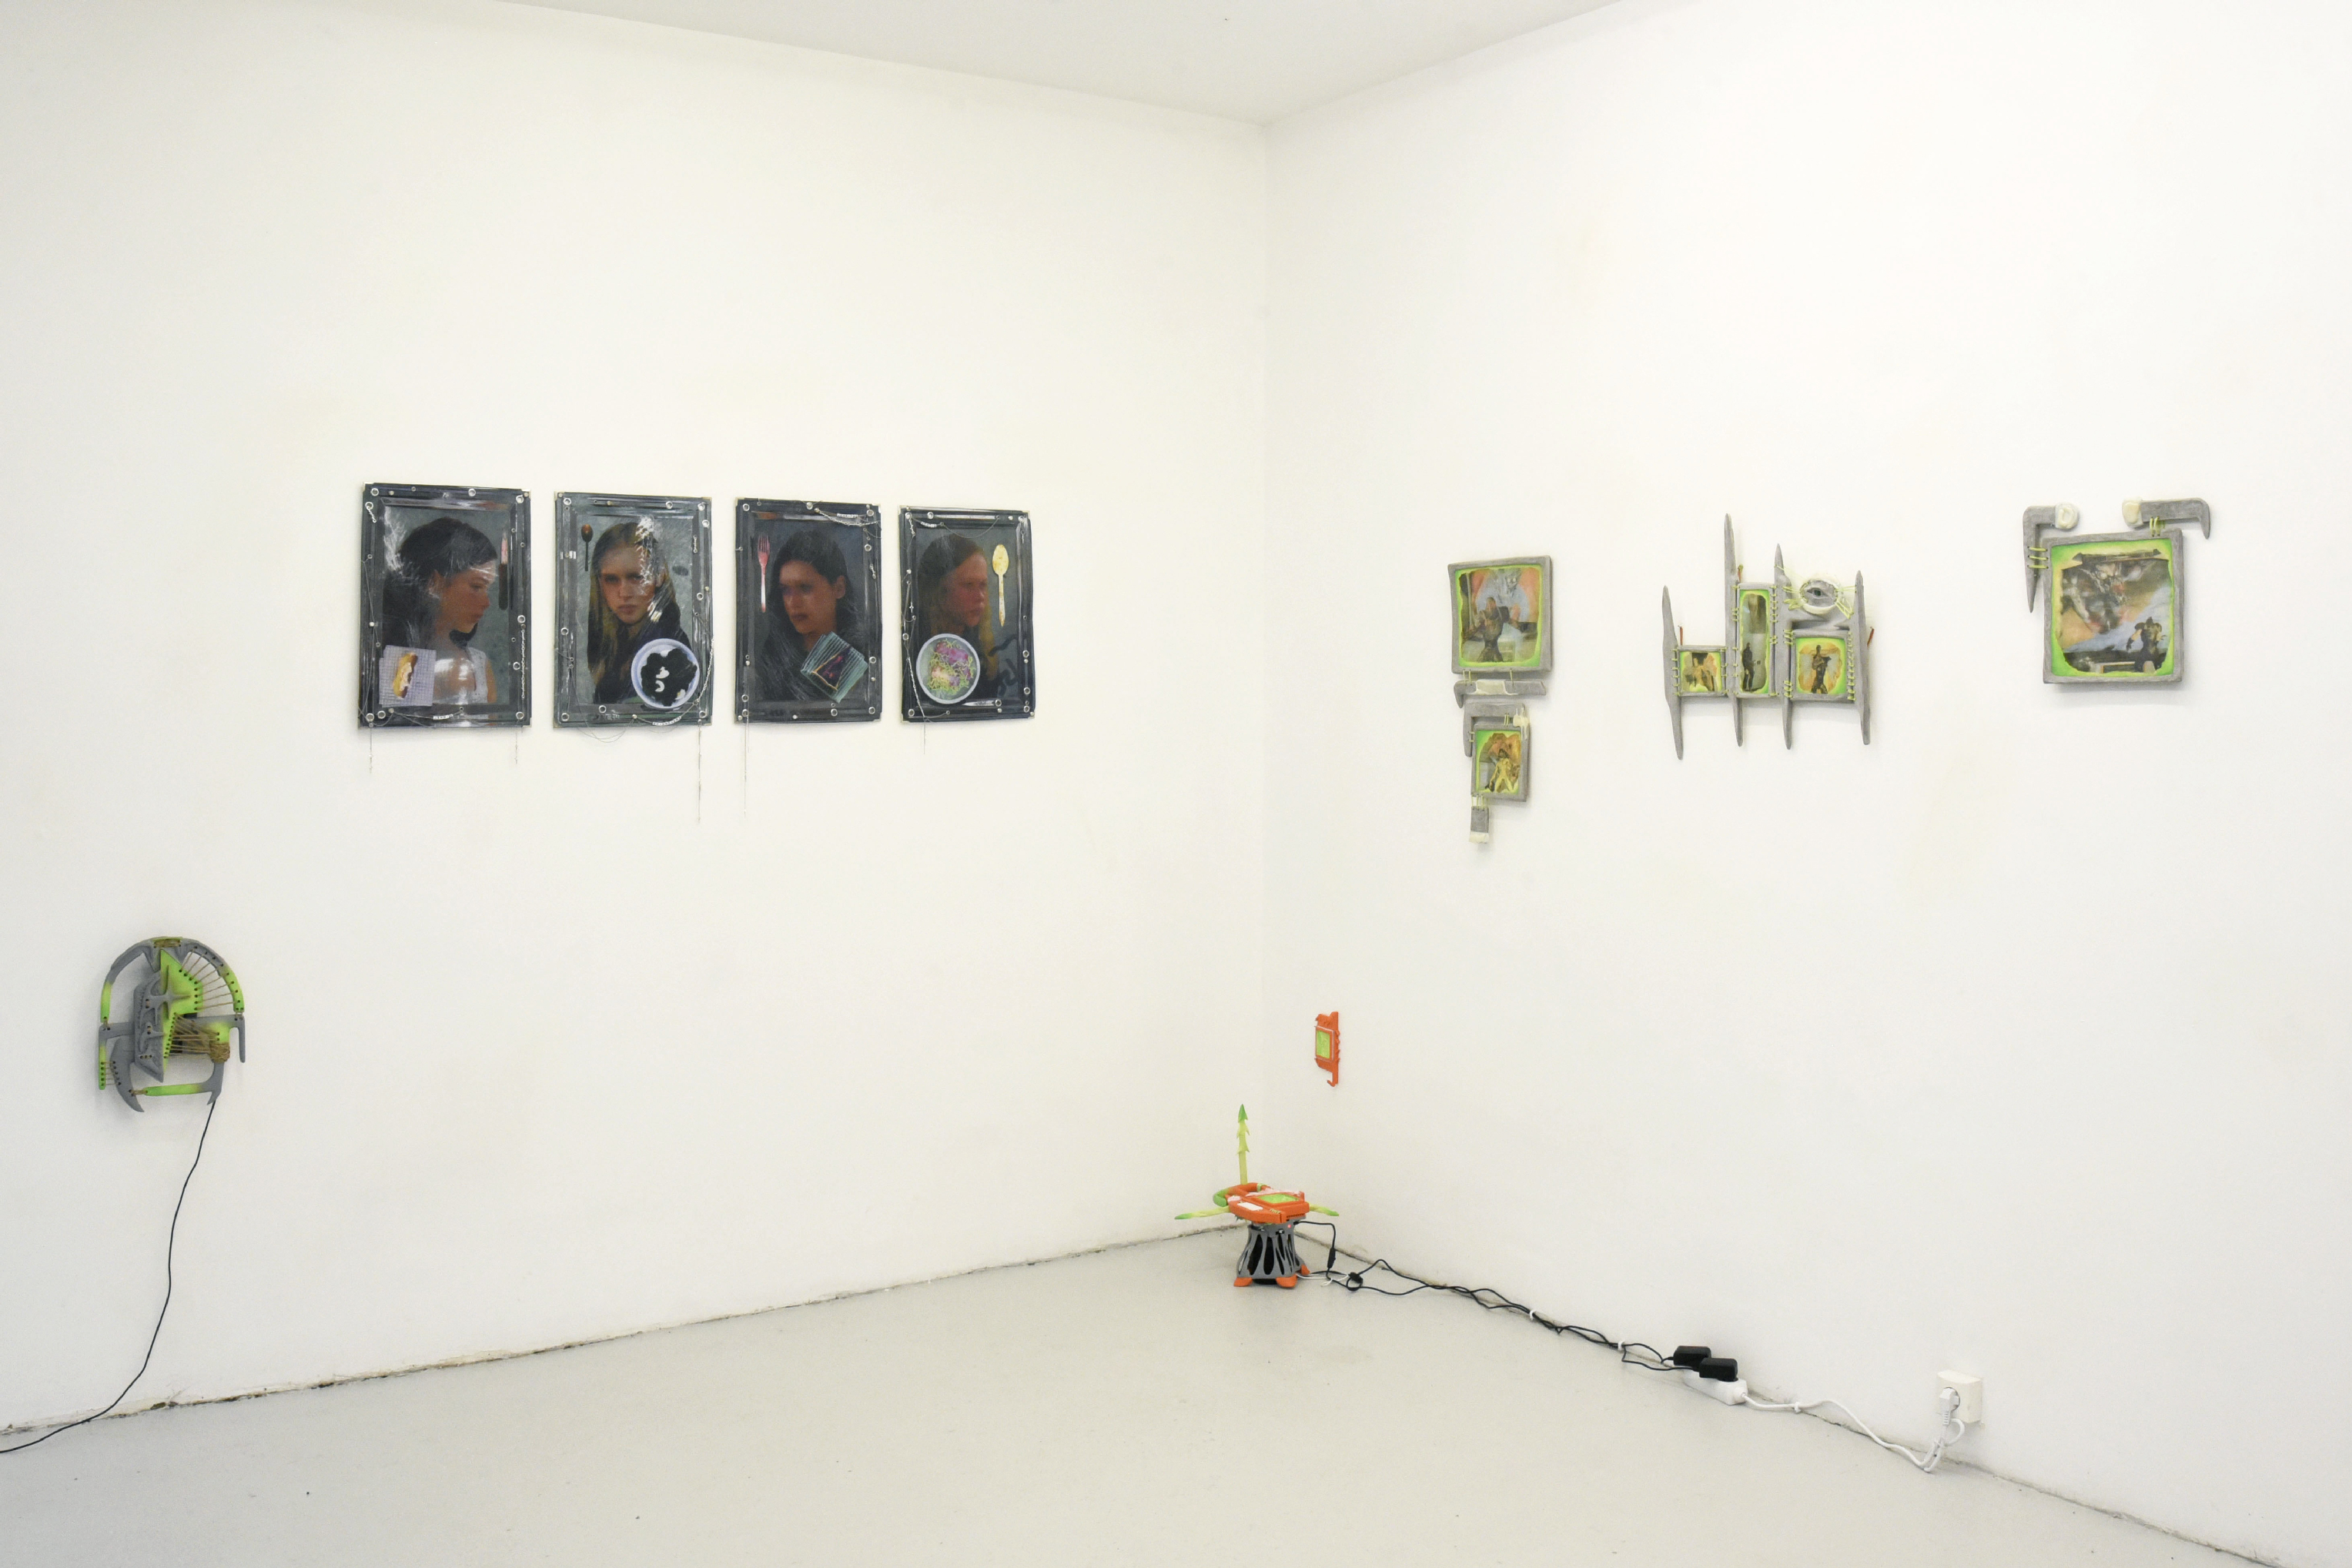 Raphael Moreira Gonalves / Zo Brunet-Jailly, exhibition view, Group Show "DISSIDIA" at Galerie Julio, Paris